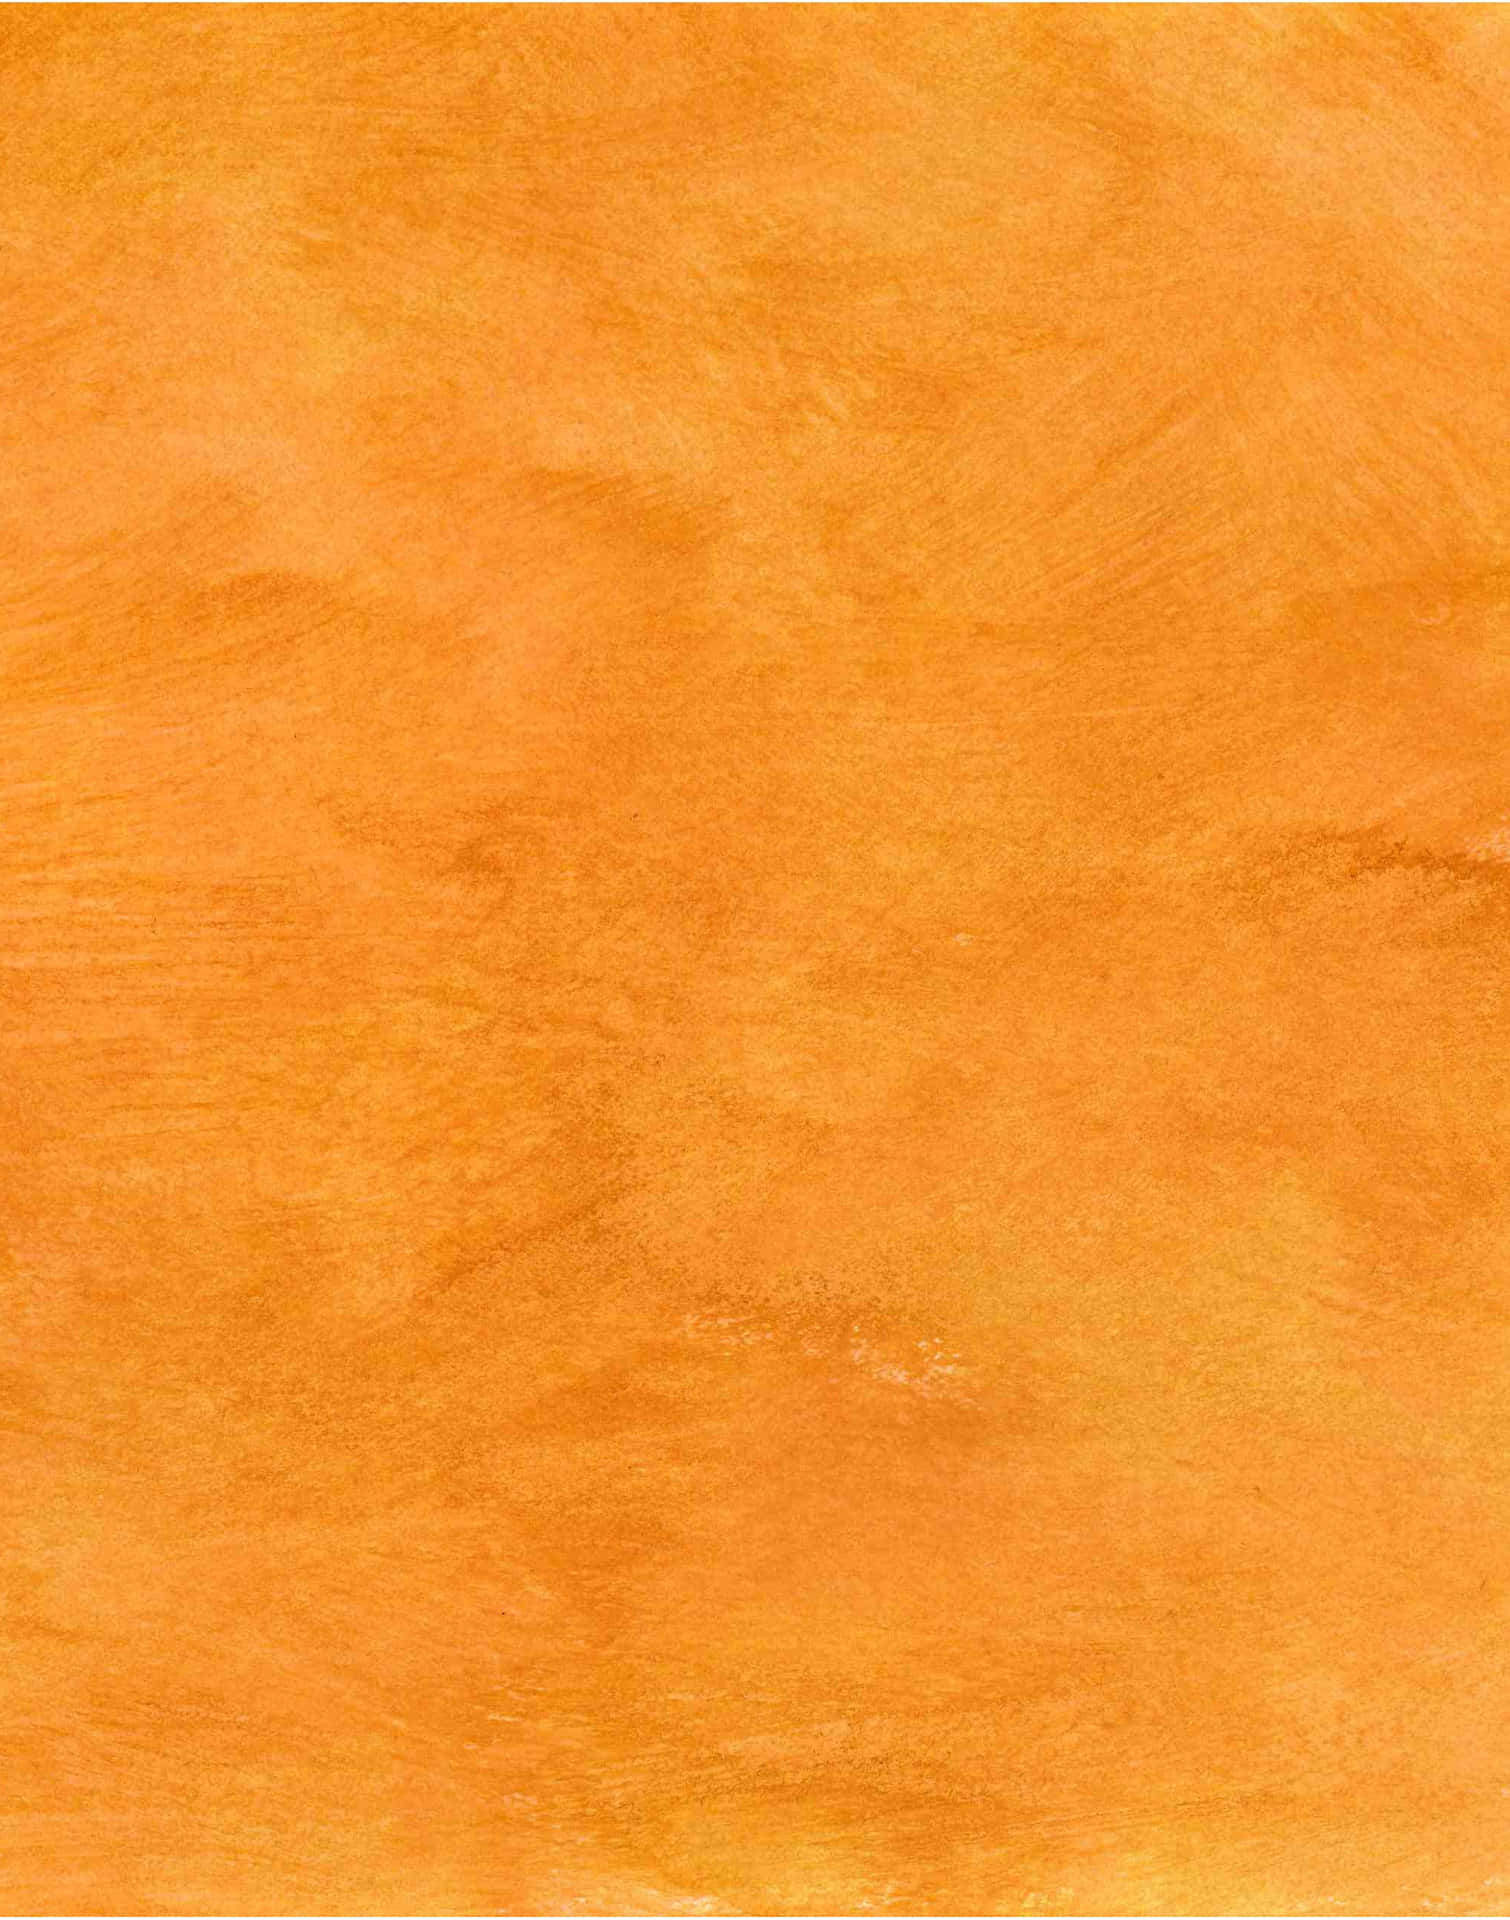 Burnt Orange Textured Background Wallpaper